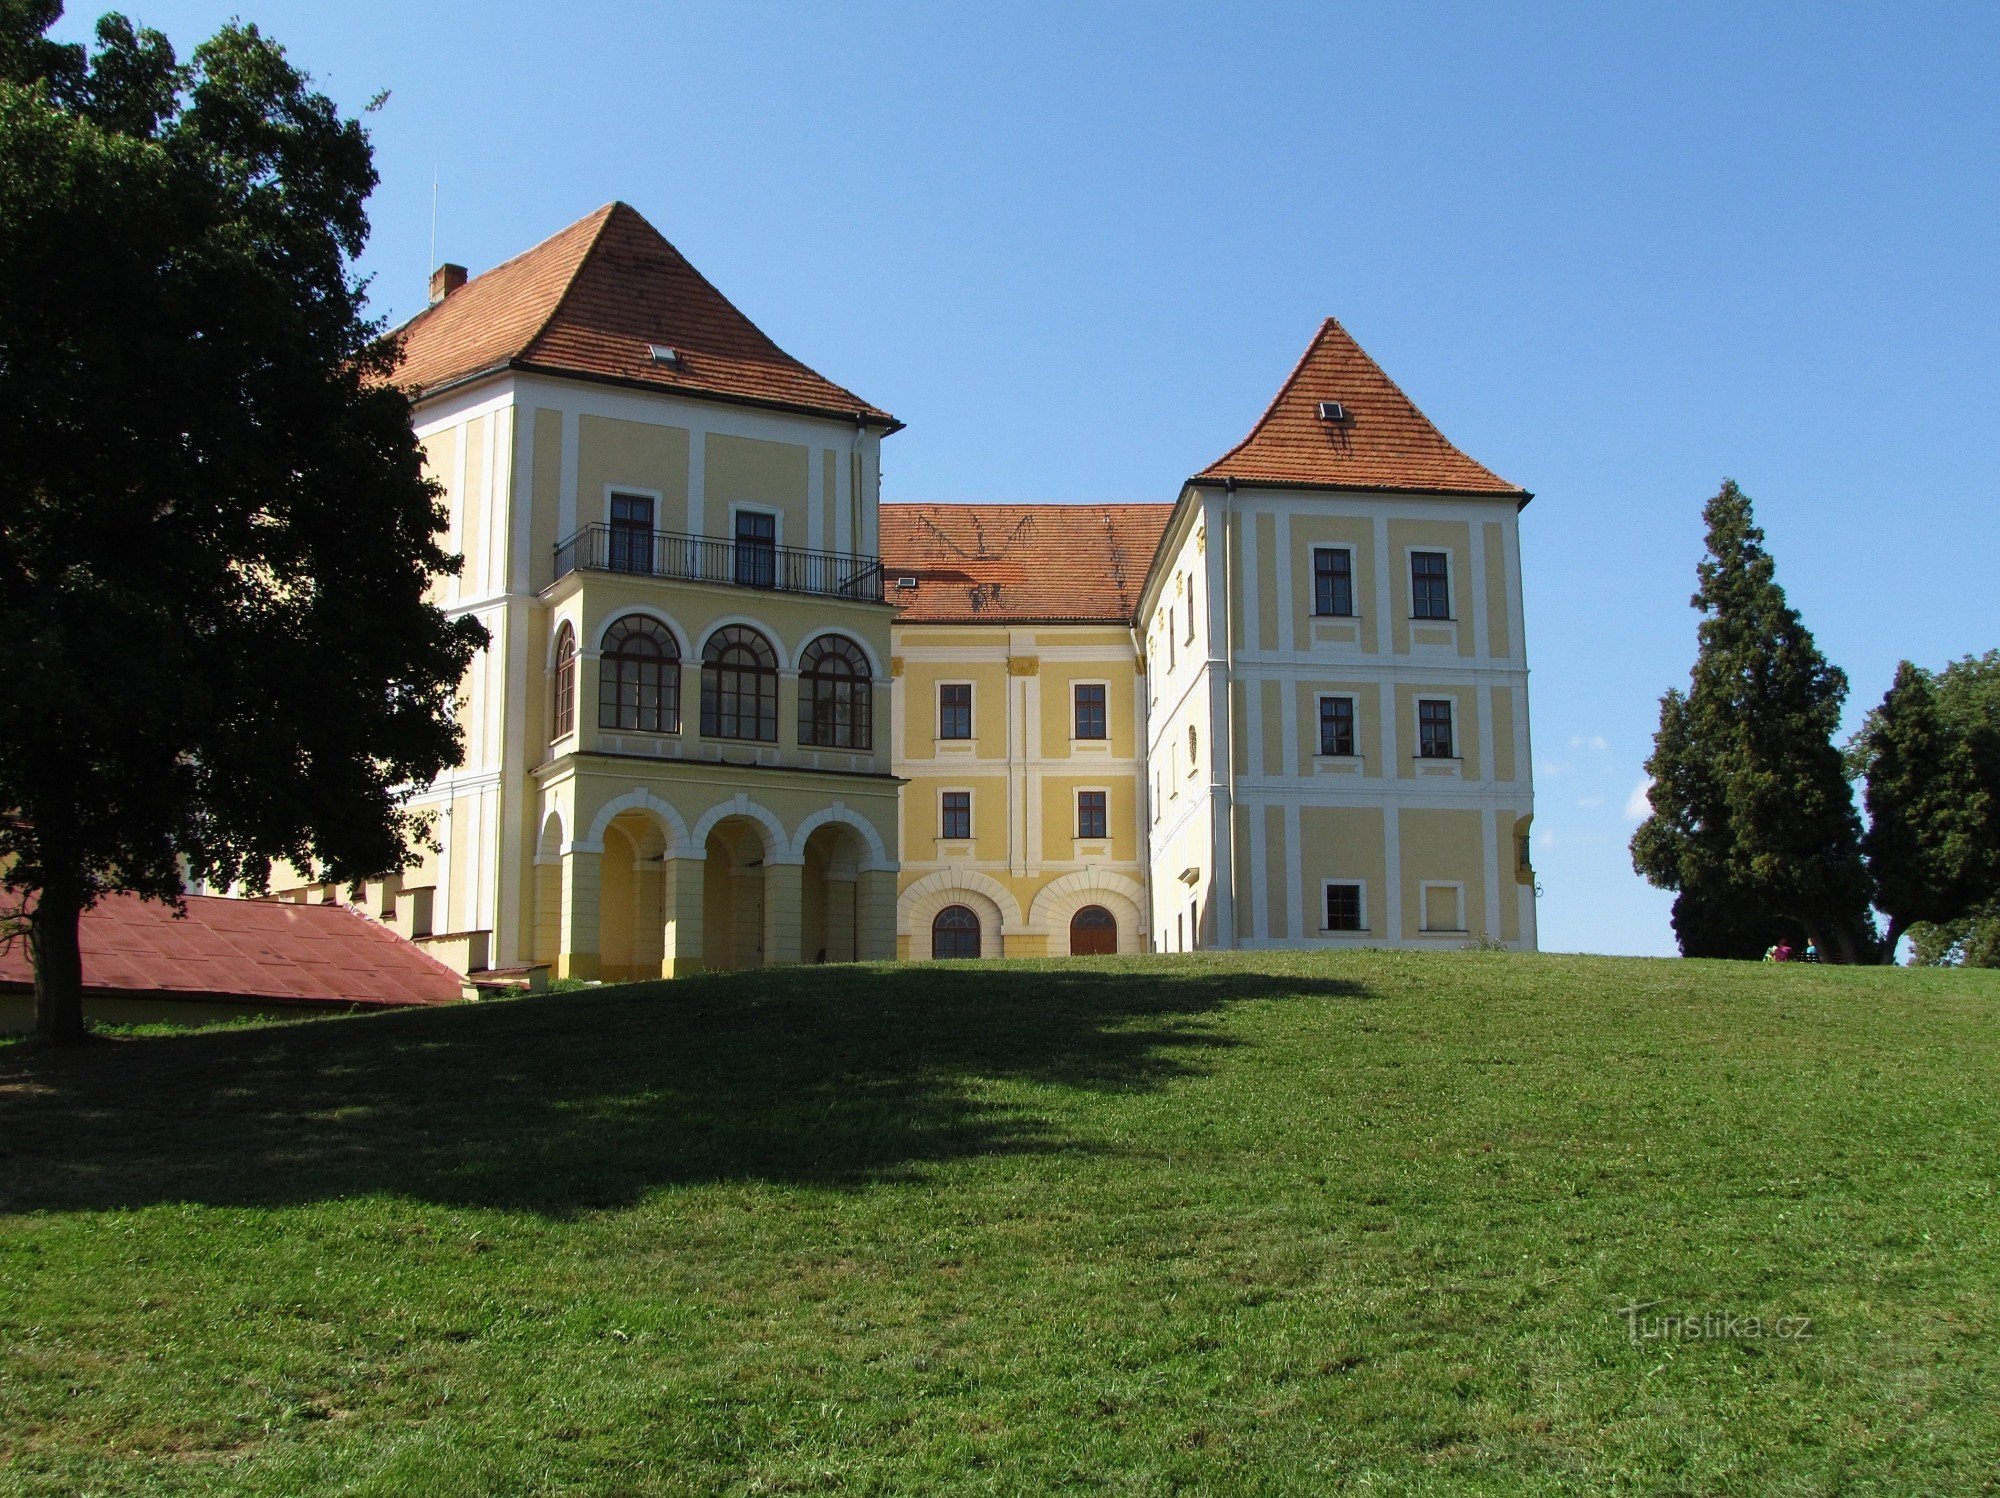 Visita ao castelo em Letovice